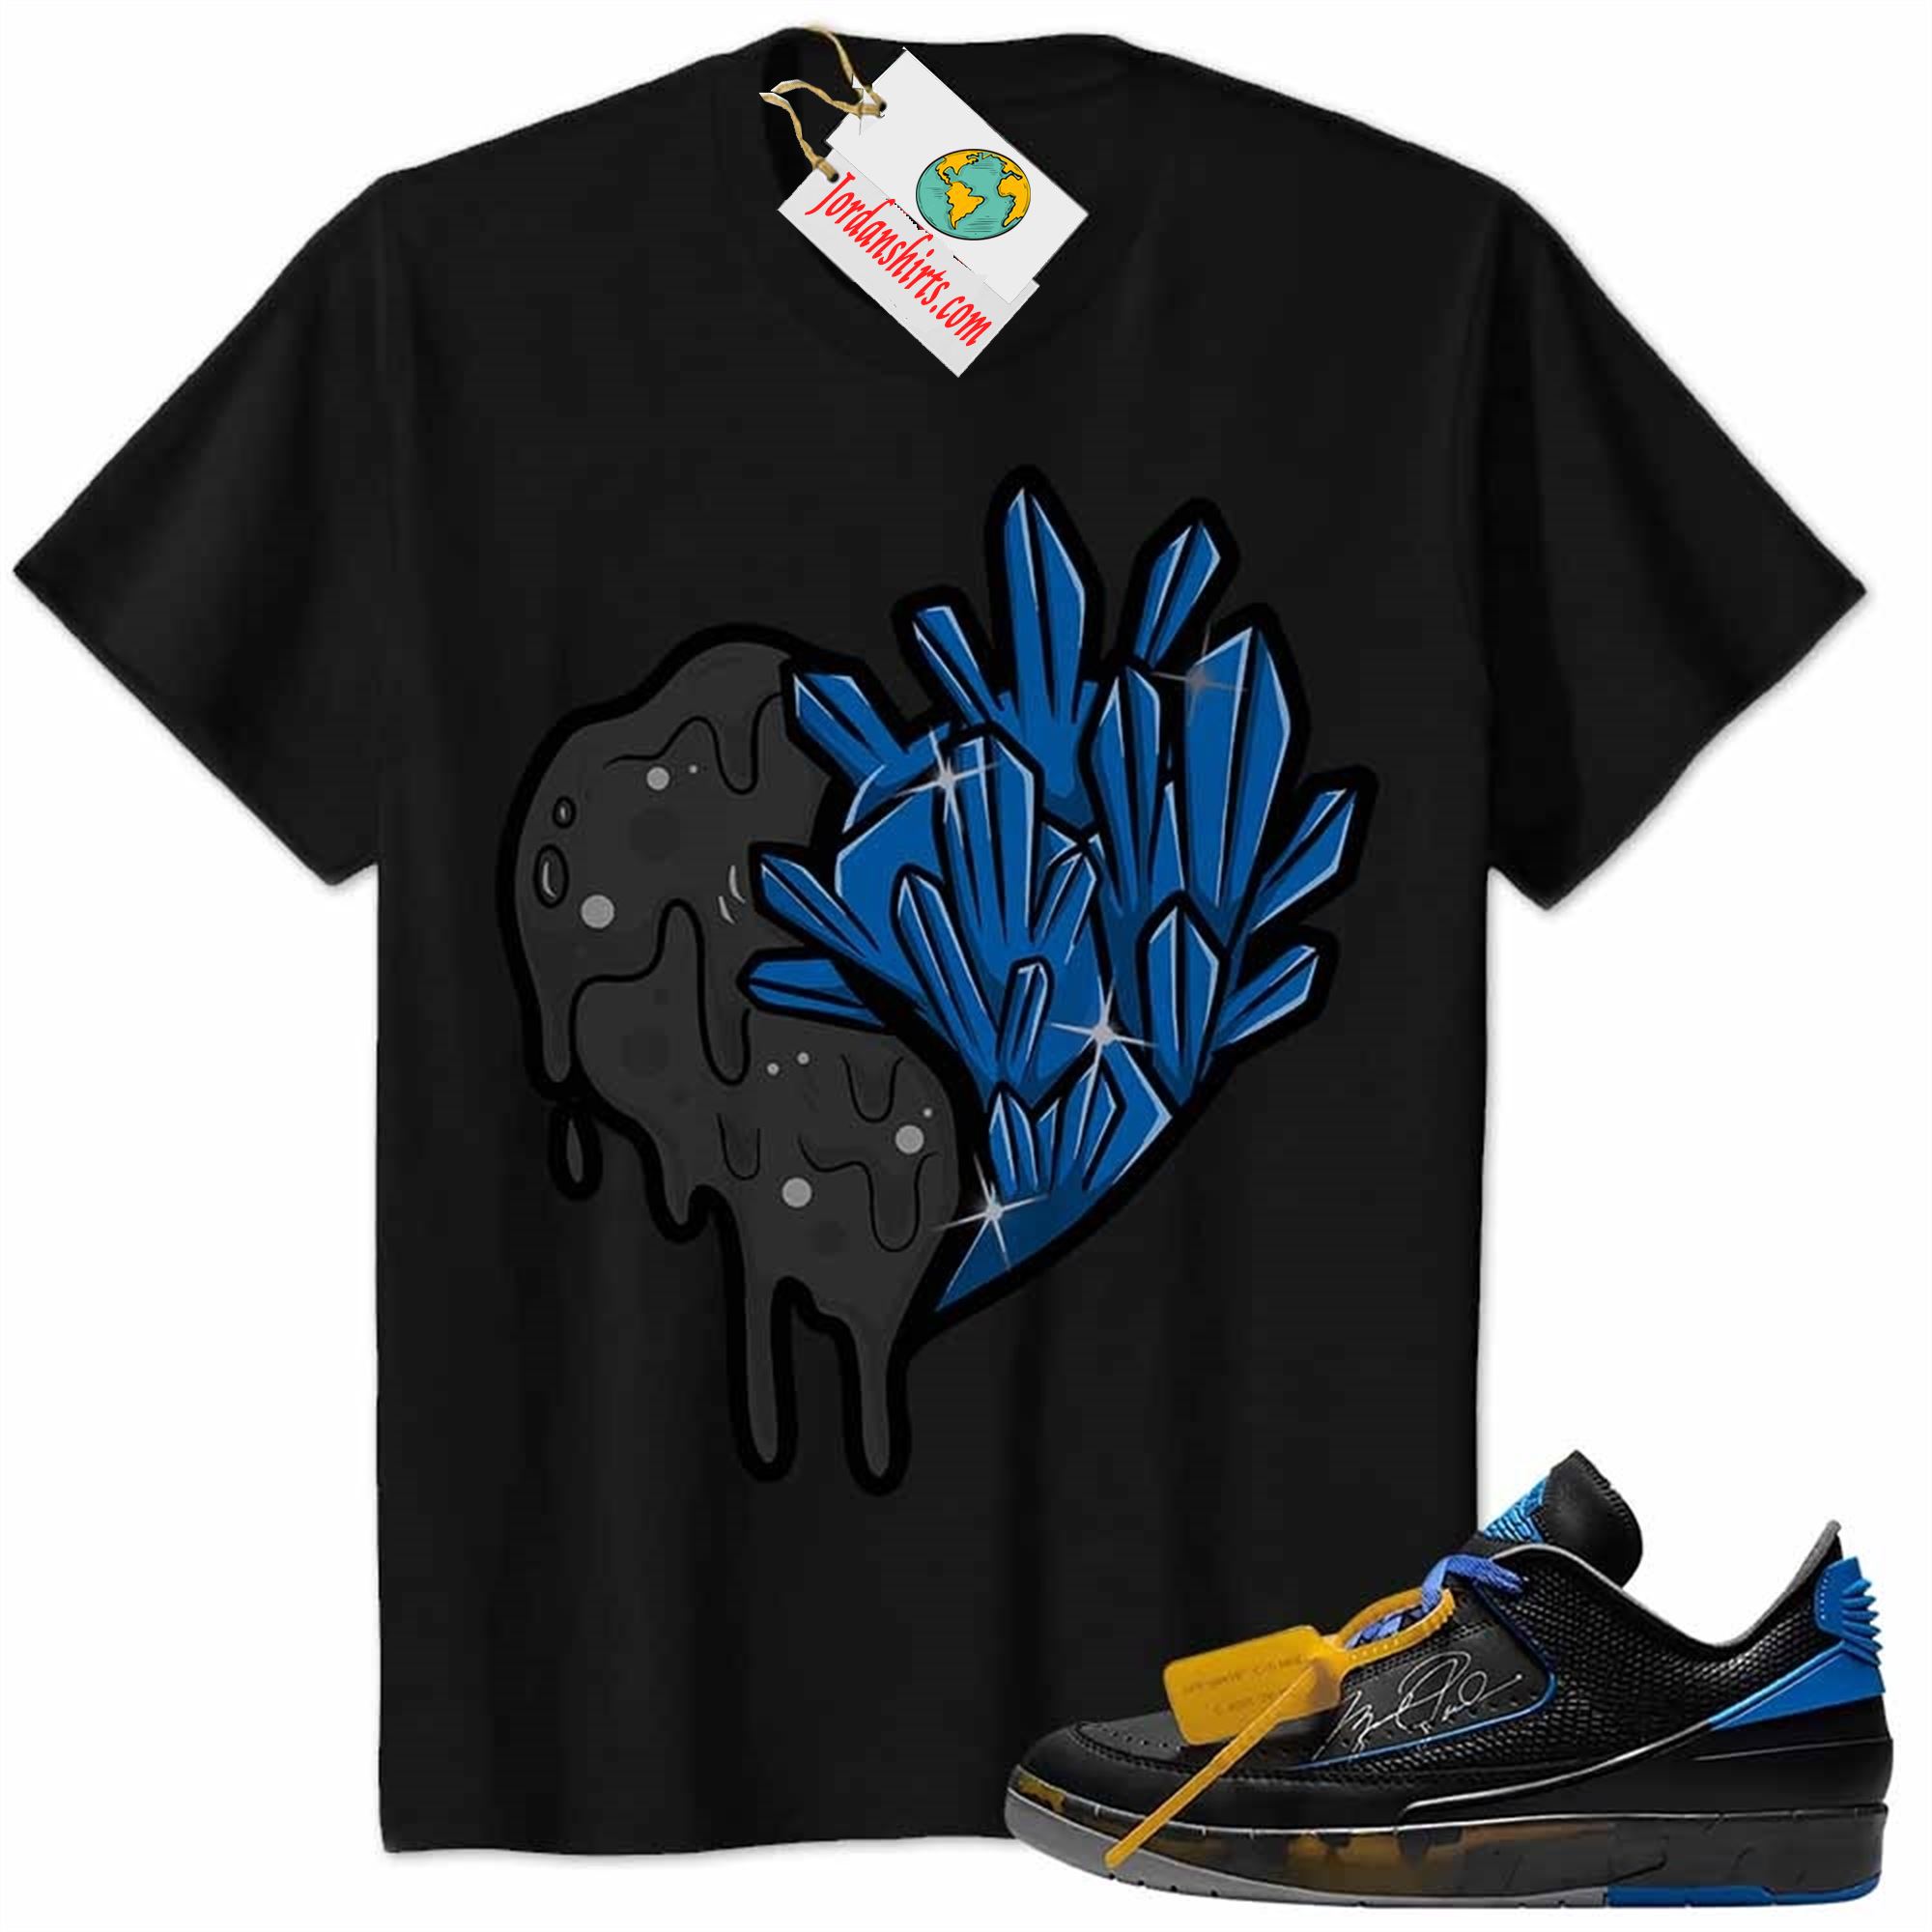 Jordan 2 Shirt, Crystal And Melt Heart Black Air Jordan 2 Low X Off-white Black And Varsity Royal 2s Size Up To 5xl